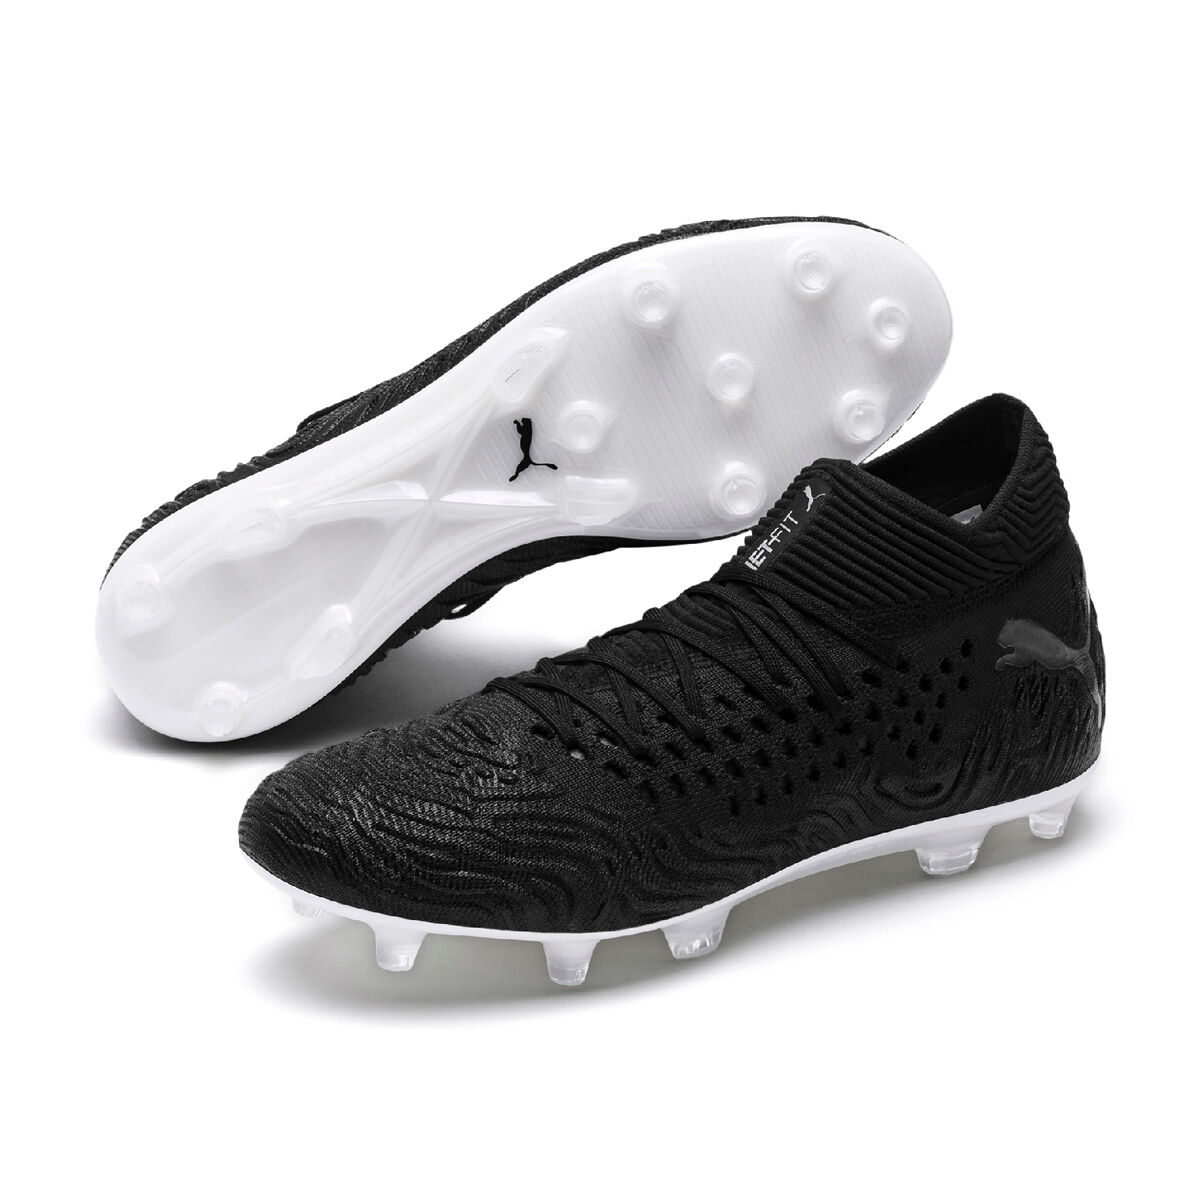 all black puma football boots